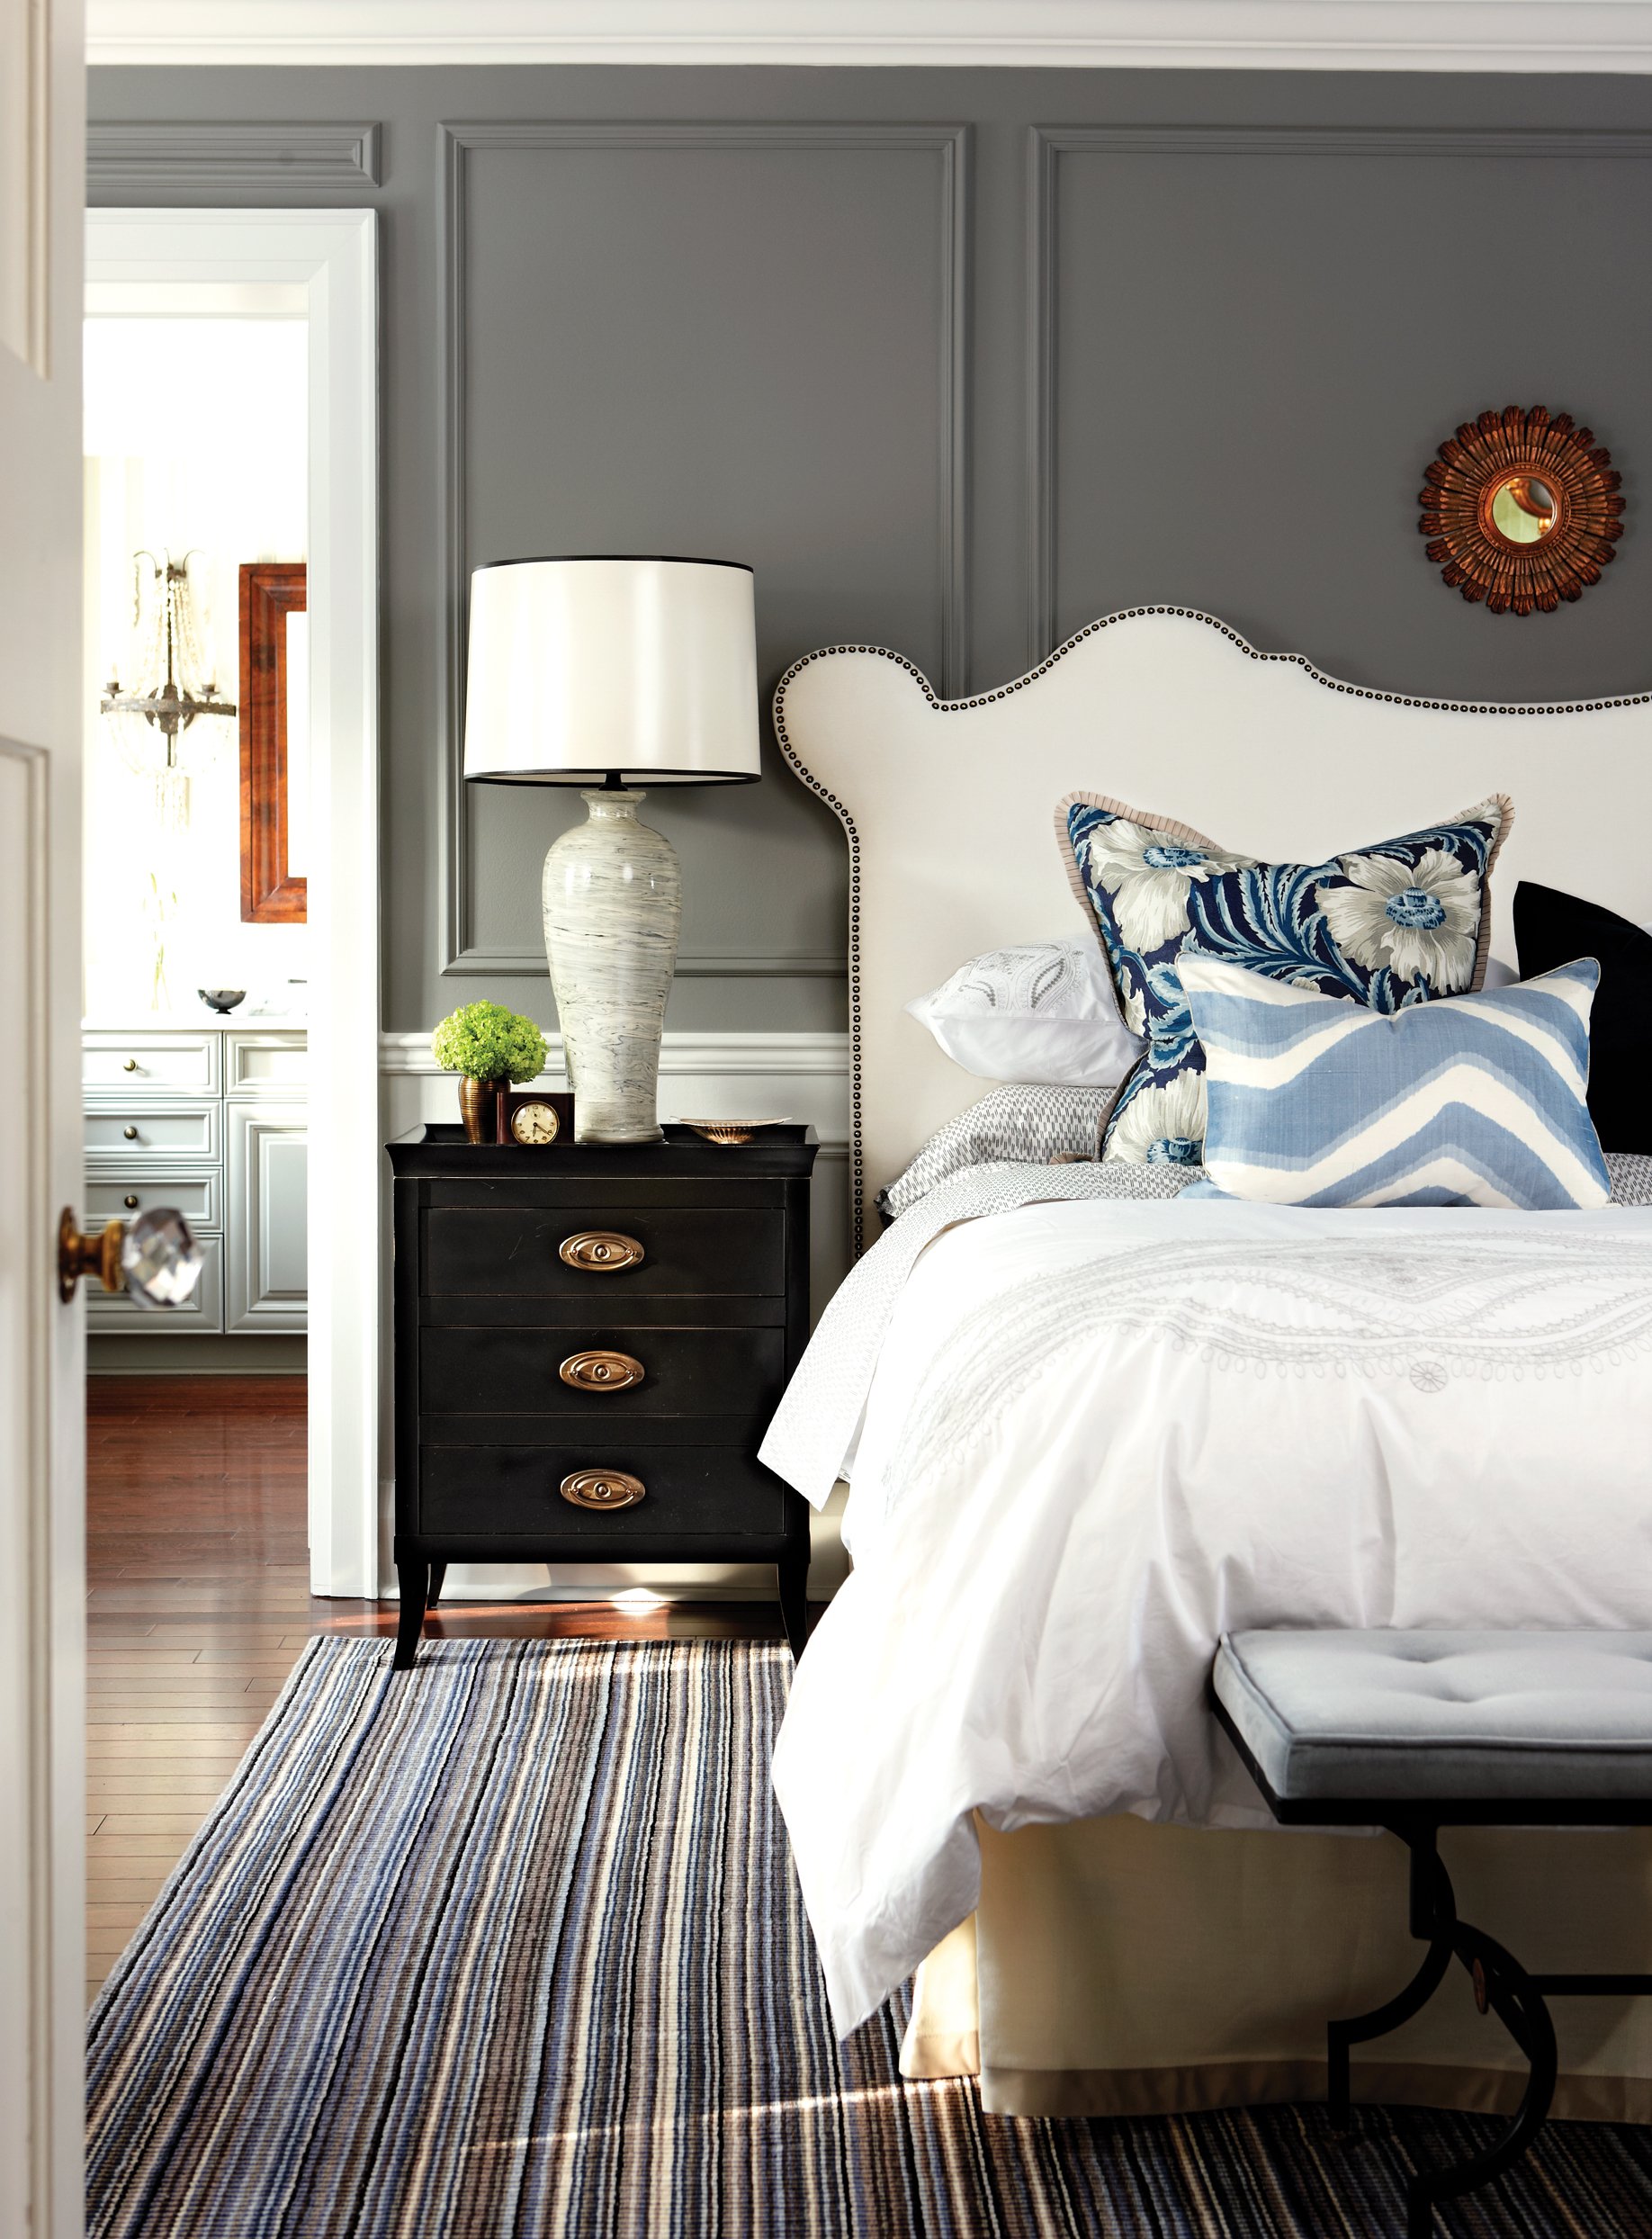 Bedroom, white bed, grey walls, crown moulding, striped carpet, Feb 13, p58